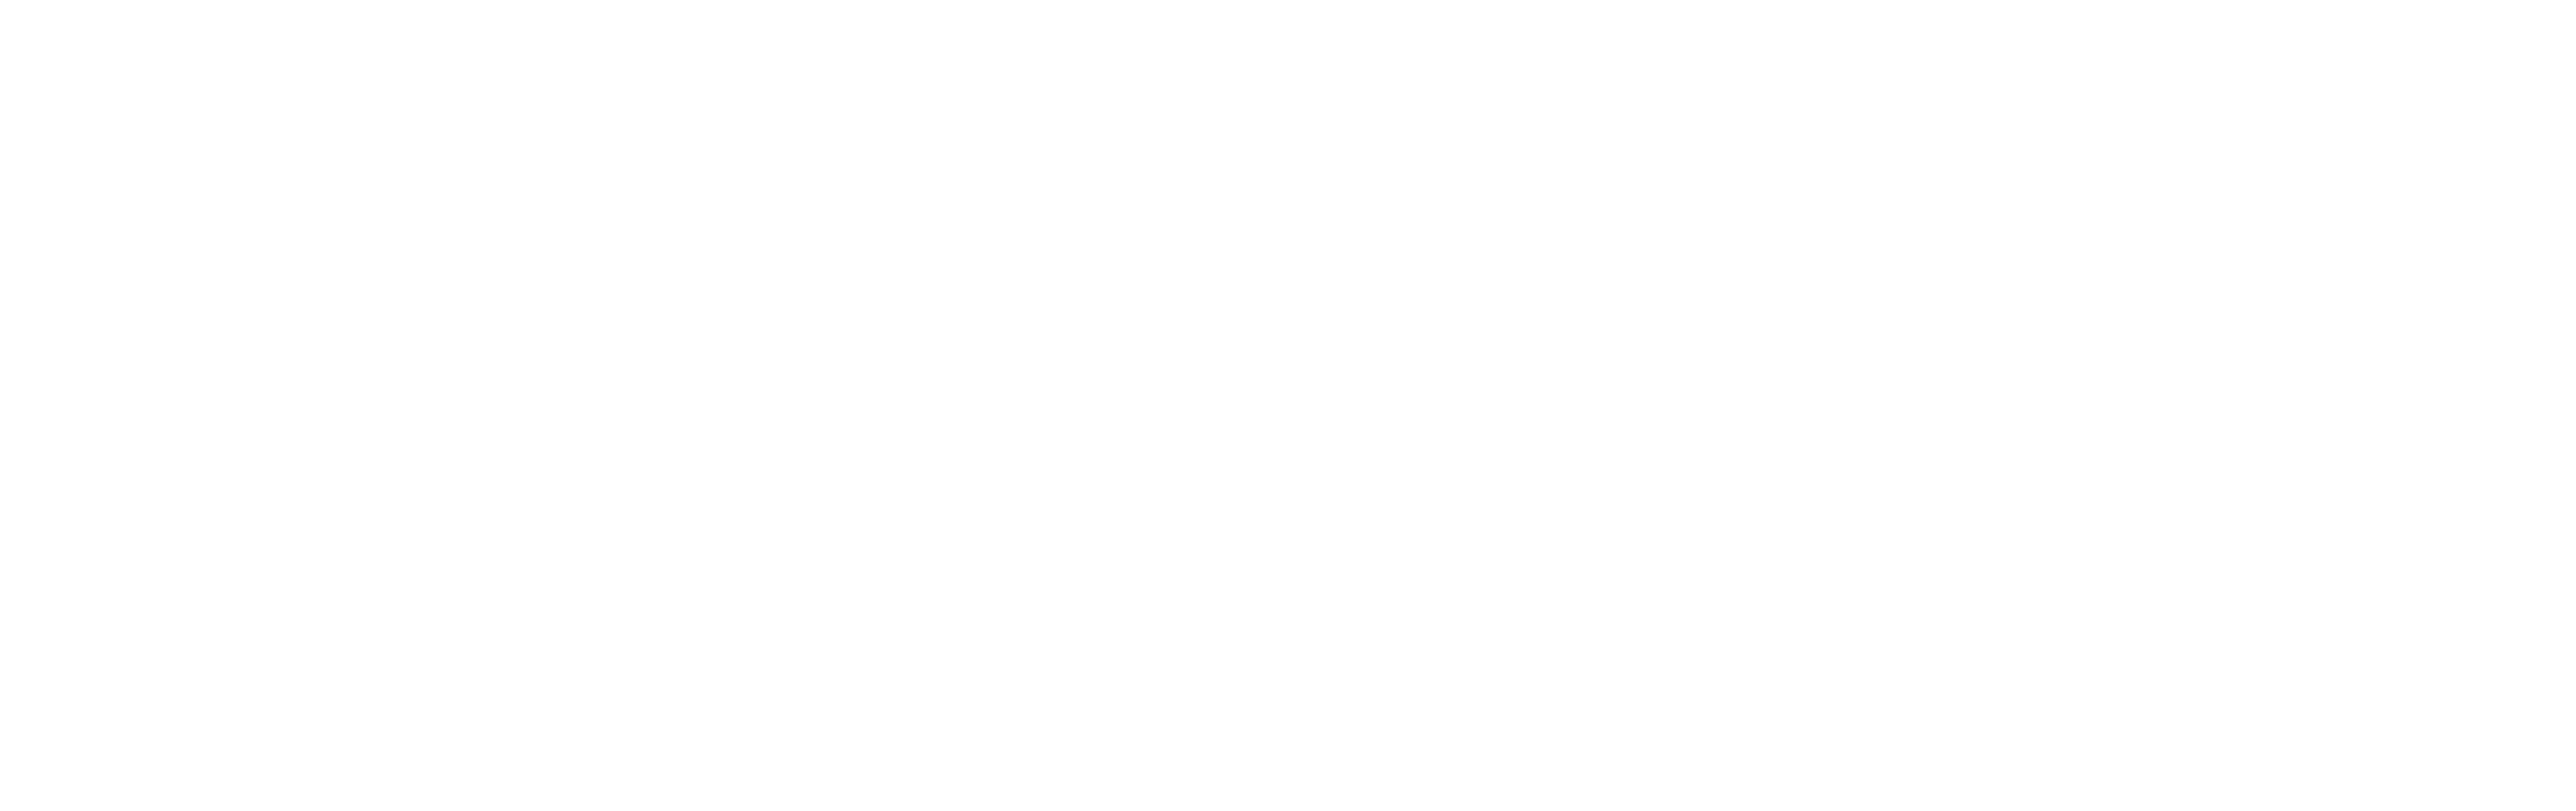 logo htx Hoa sen-01